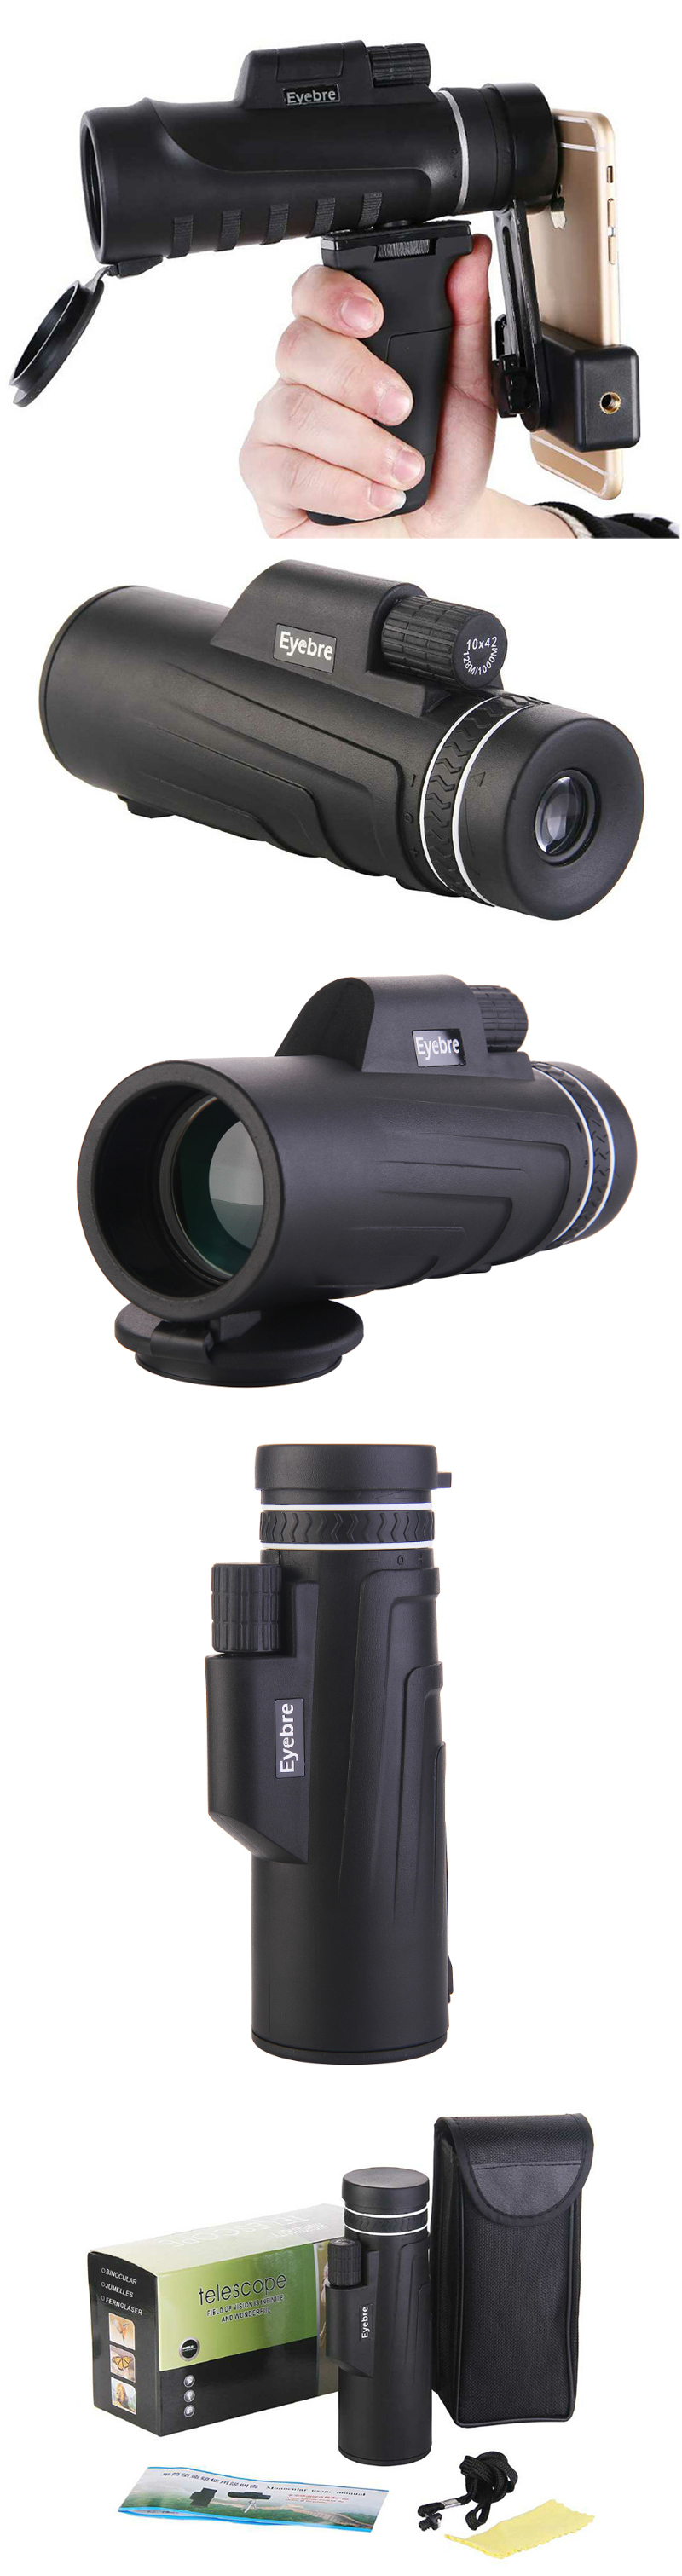 10x42-HD-Zoom-Monocular-Waterproof-Telescope-Camping-Night-Vision-Bird-Watching-With-Phone-Clip-1355010